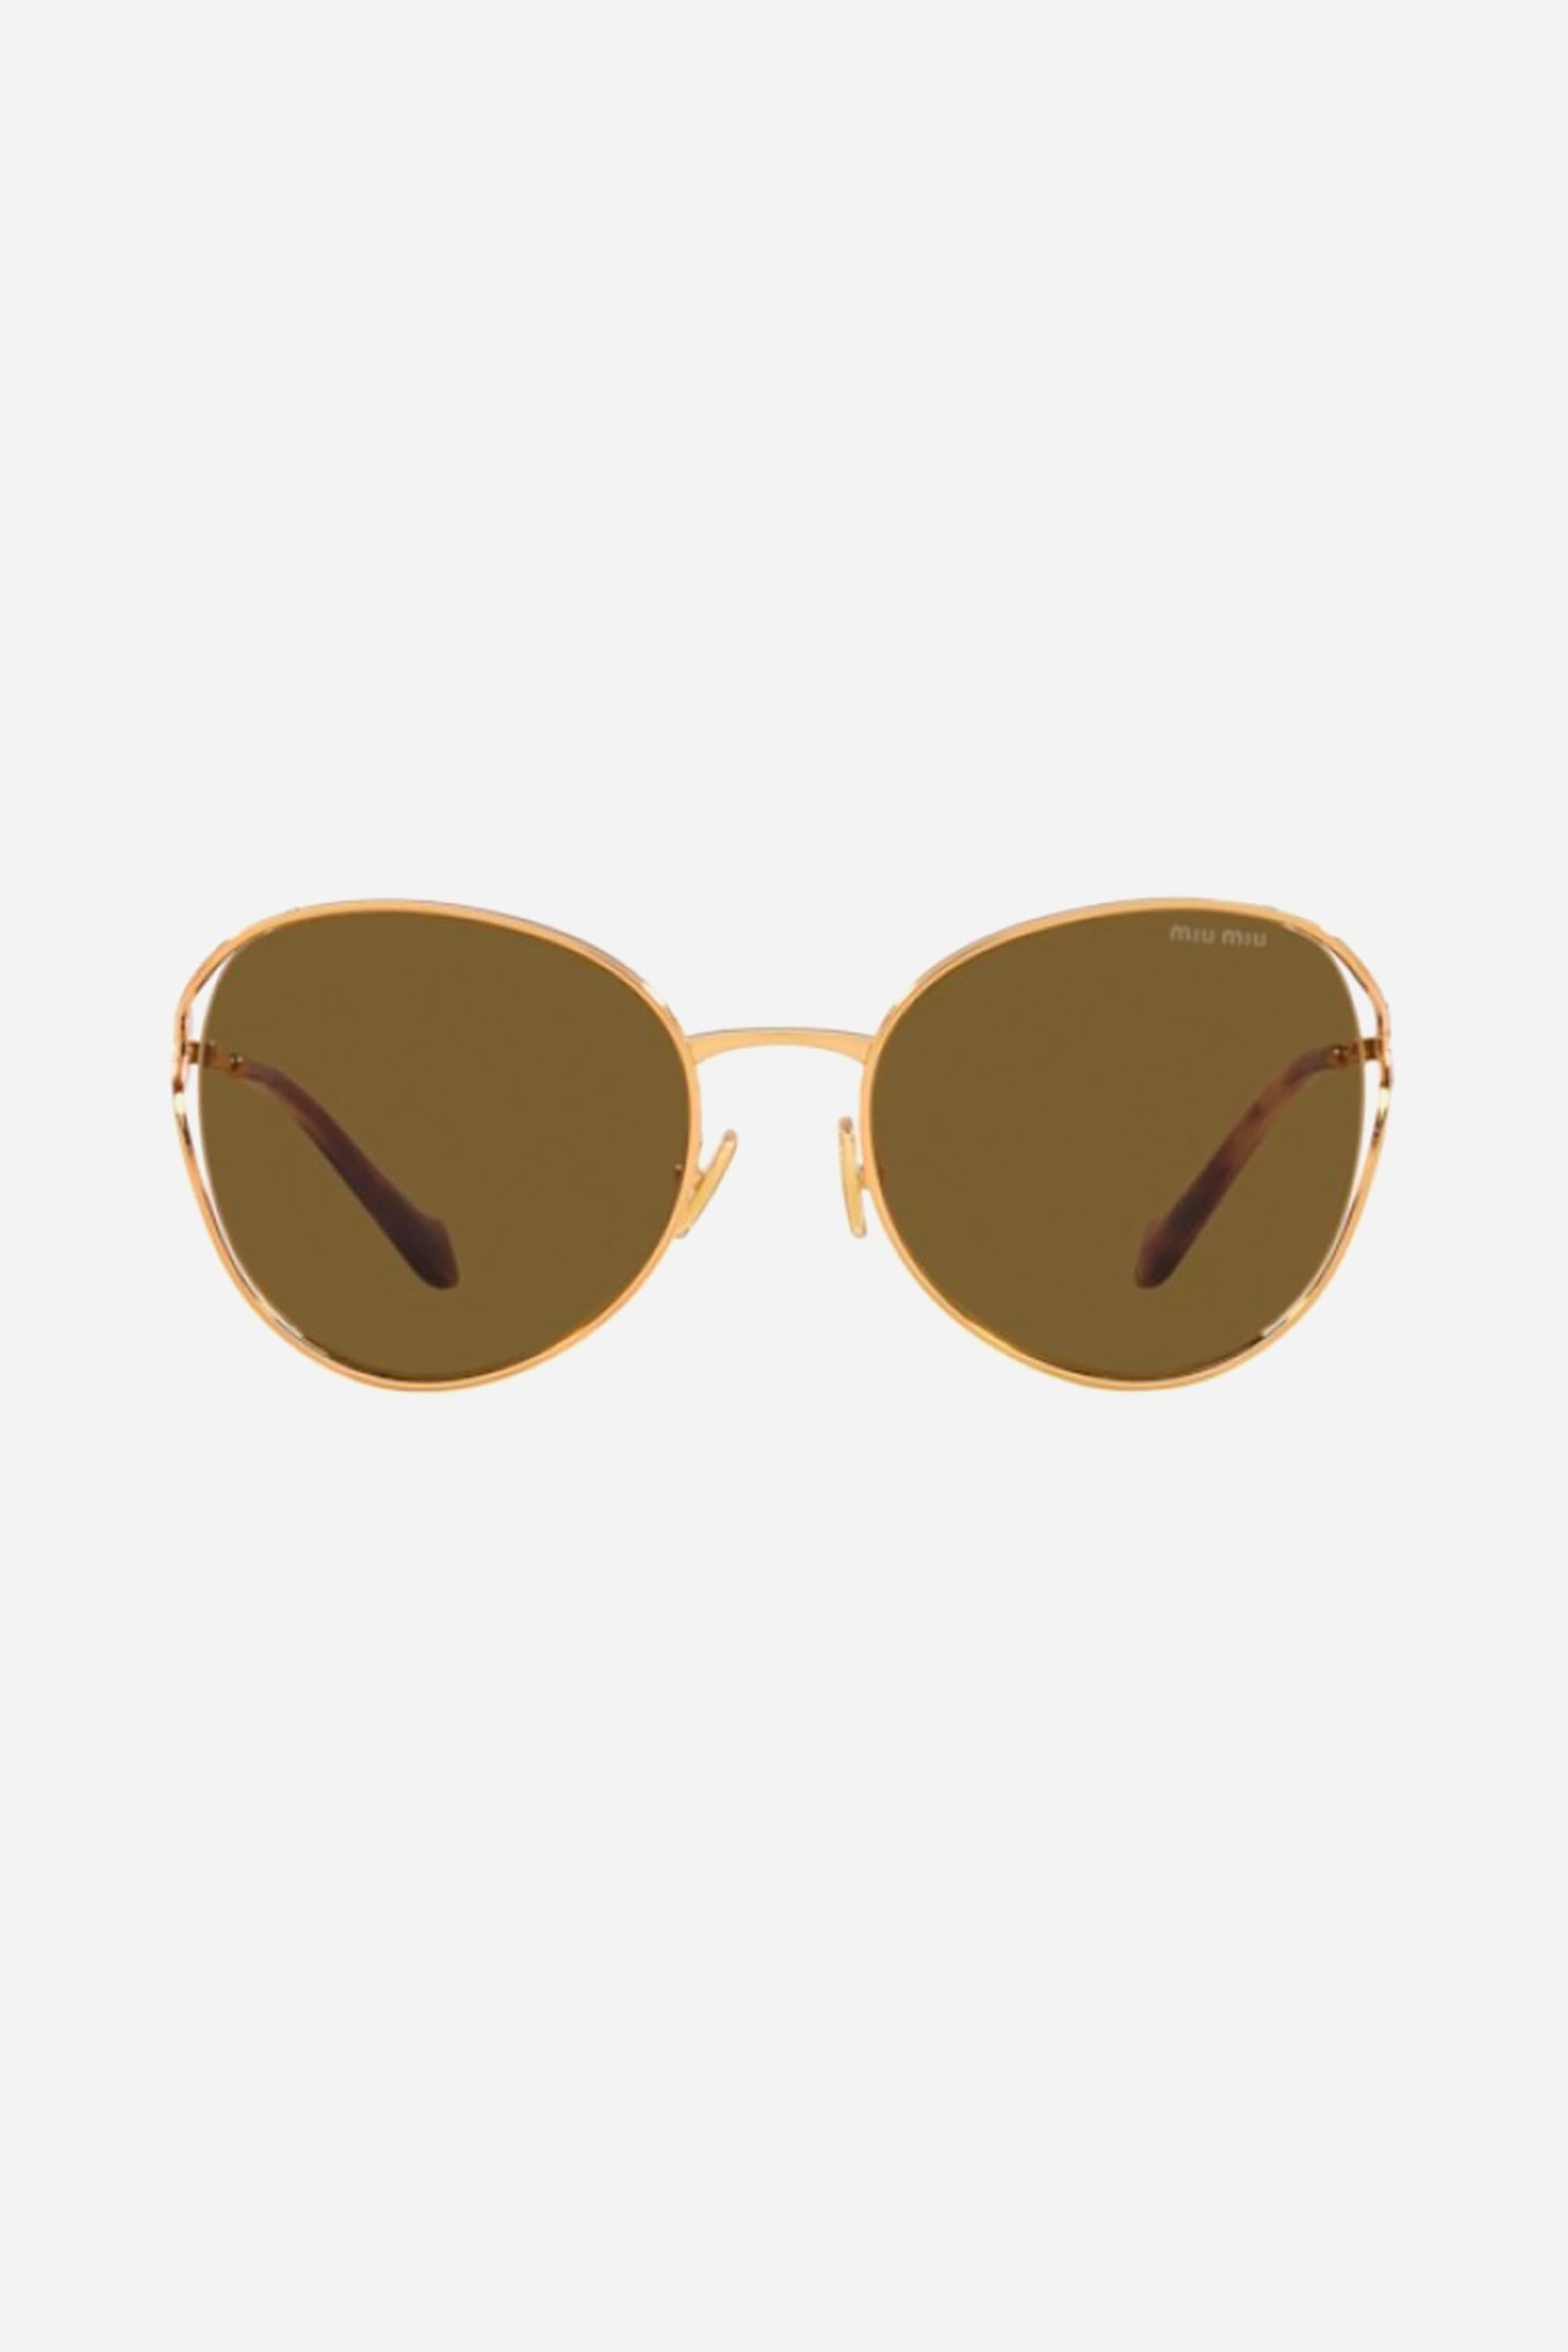 Miu Miu round metal sunglasses with dark brown mirror - Eyewear Club